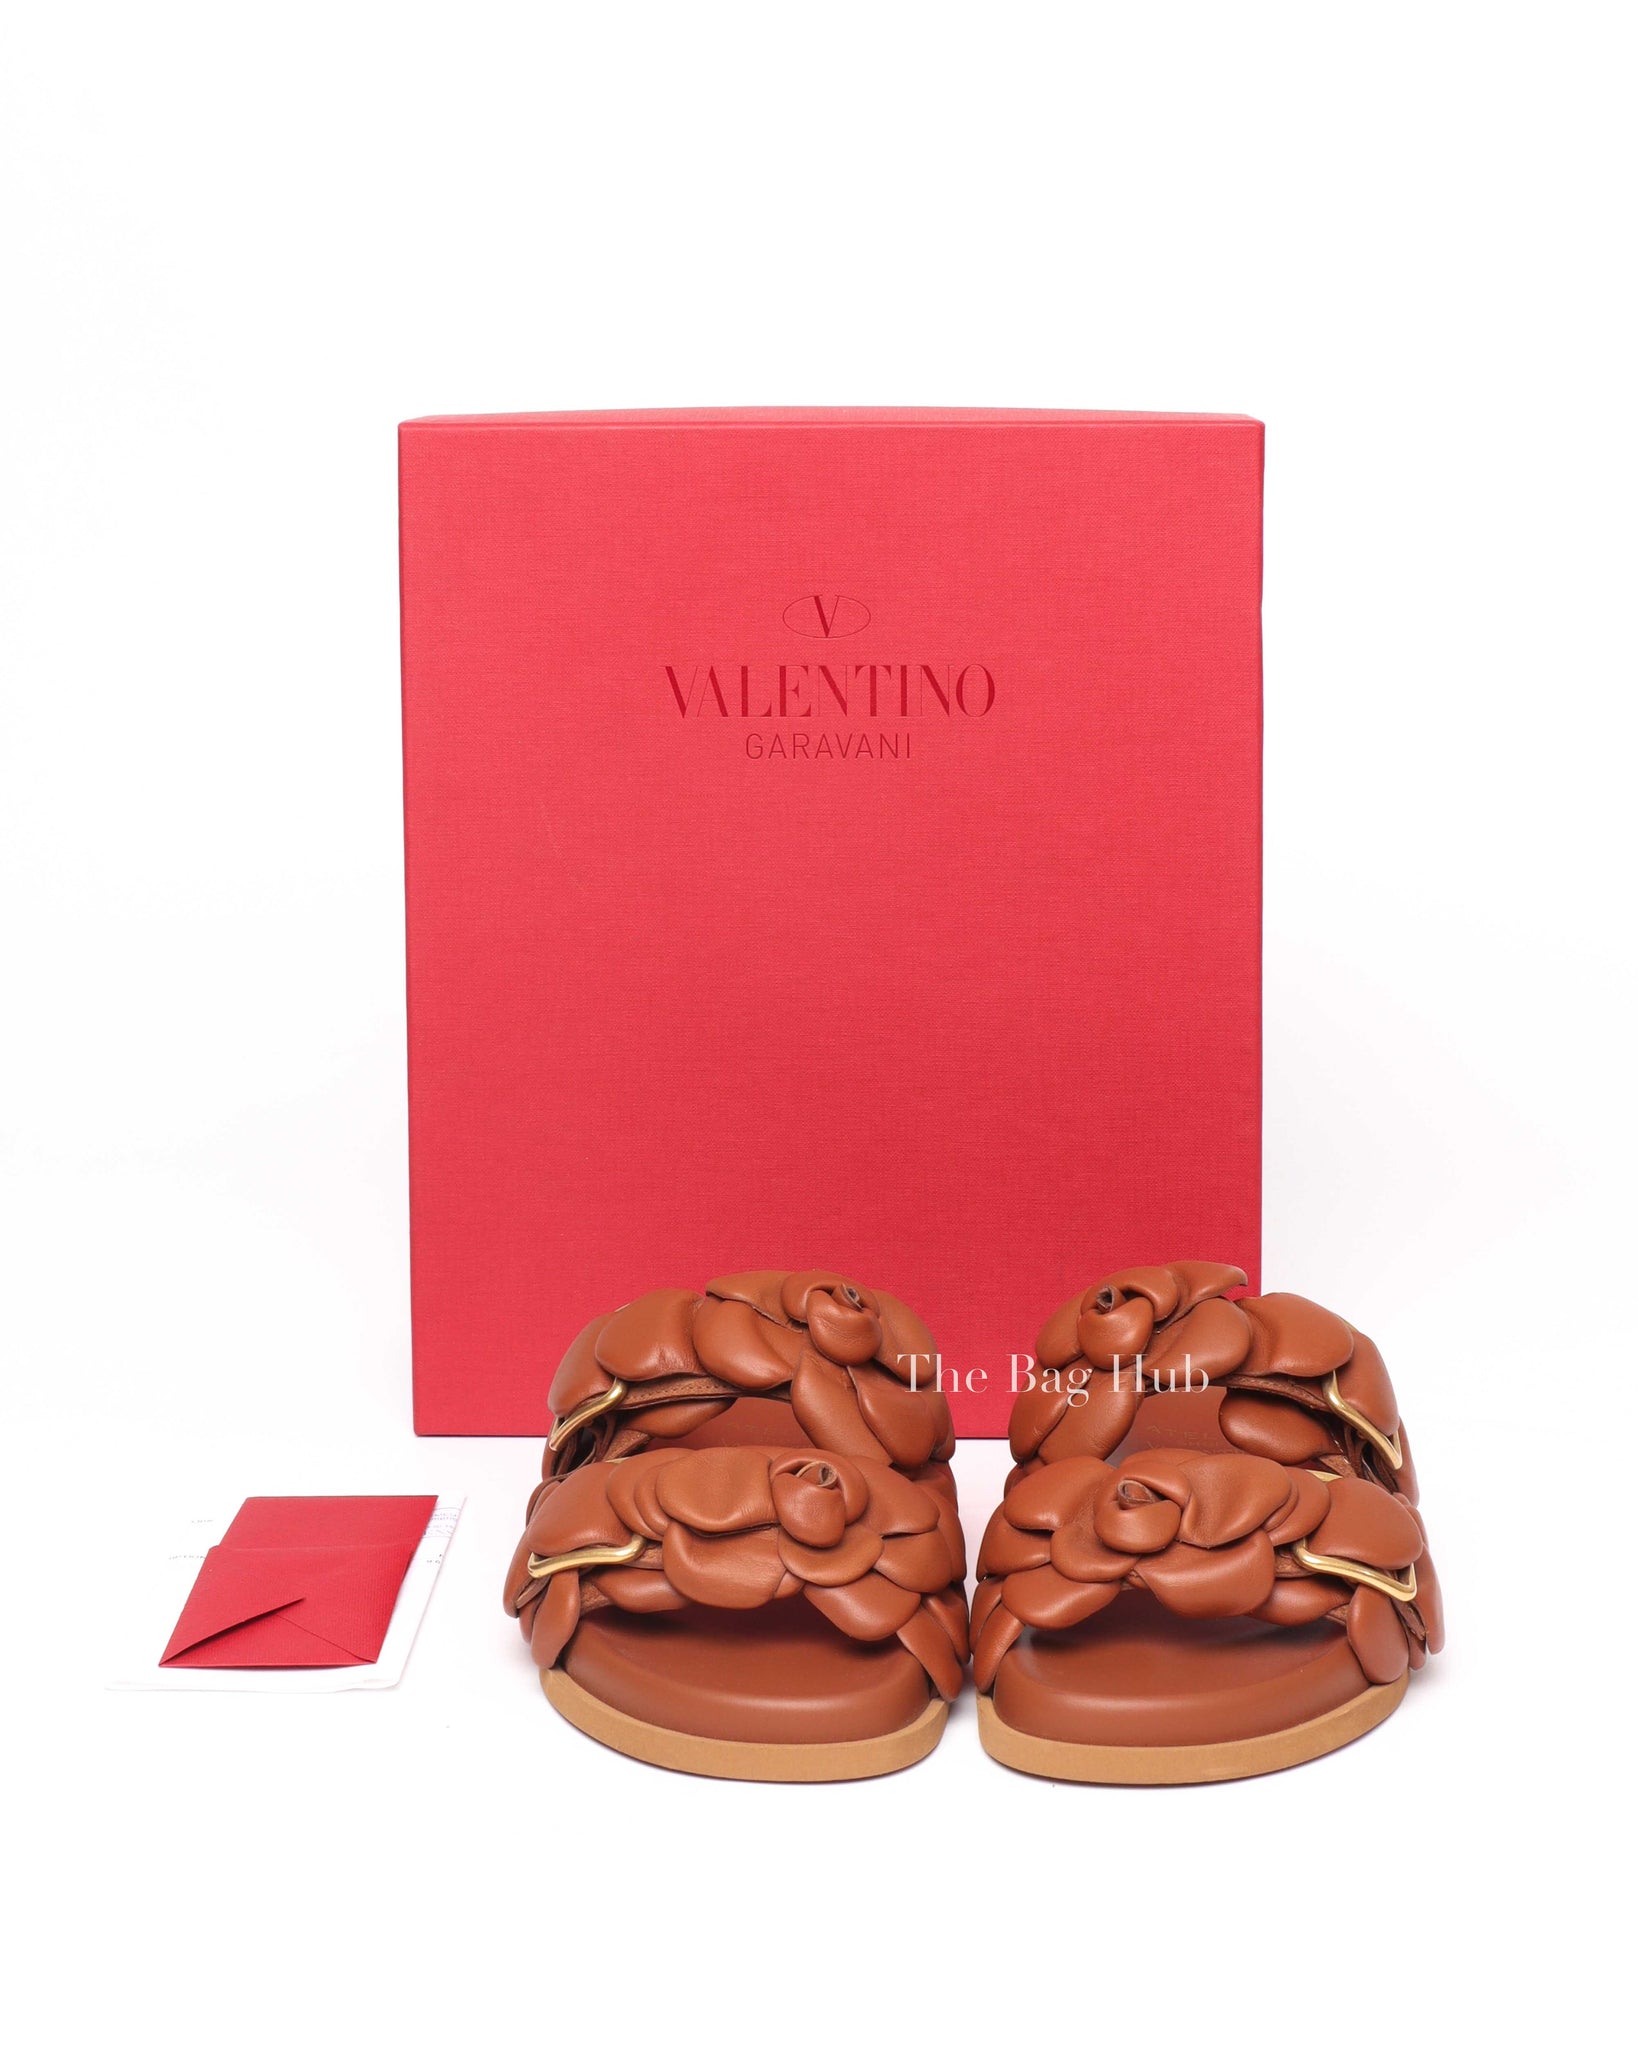 Valentino Garavani Tan Leather Atelier 03 Rose Edition Slides Size 36-9